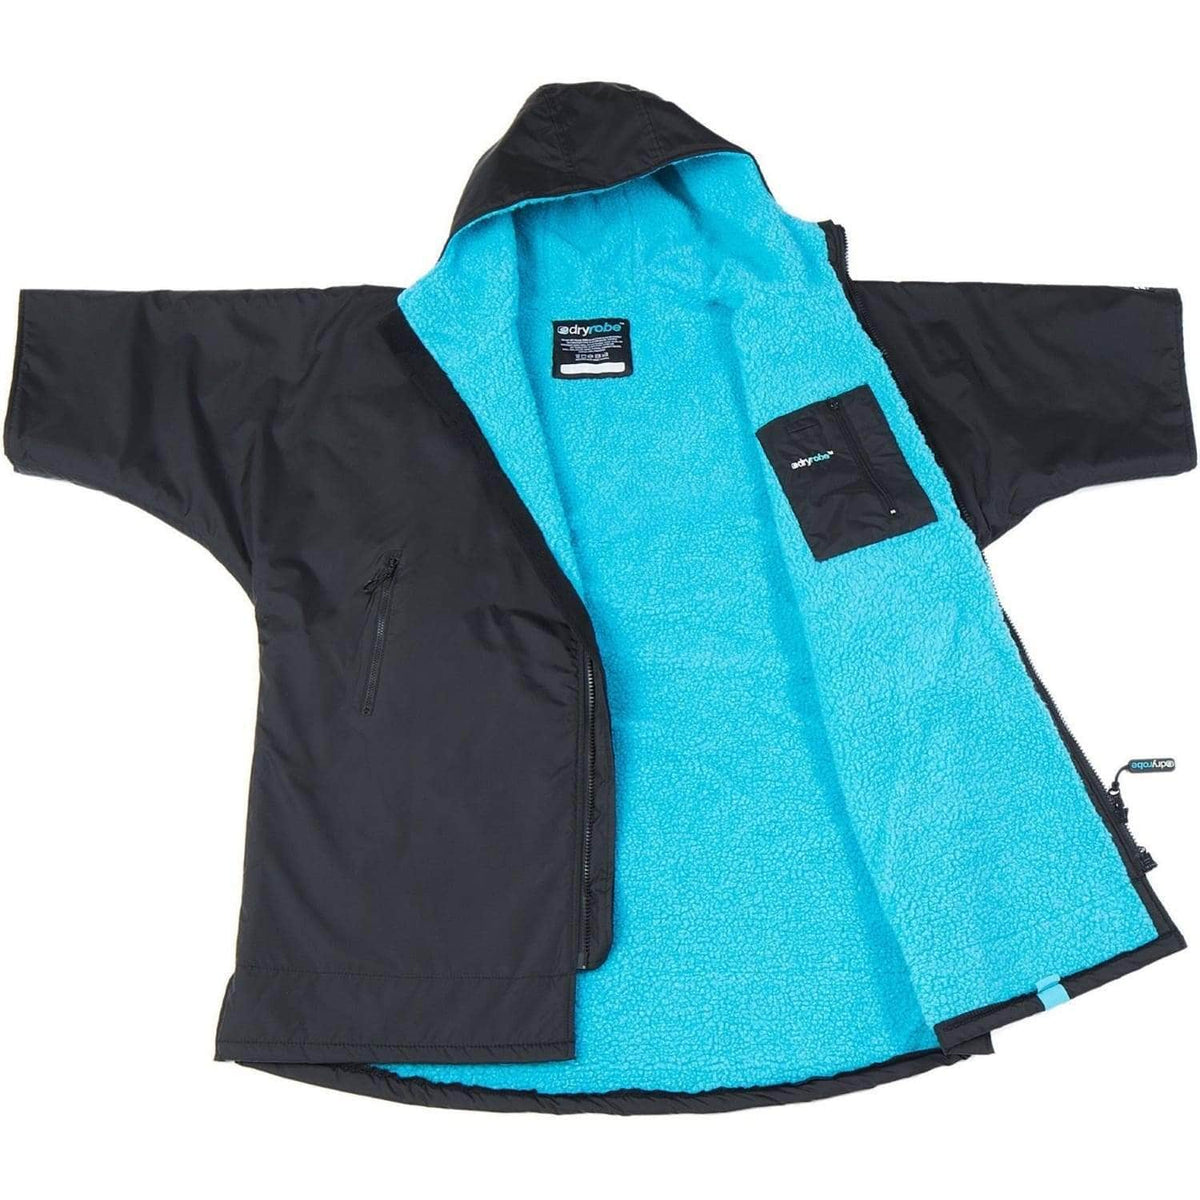 Dryrobe Advance Kids Short Sleeve Drying &amp; Changing Robe - Black/Blue - Changing Robe Poncho Towel by Dryrobe